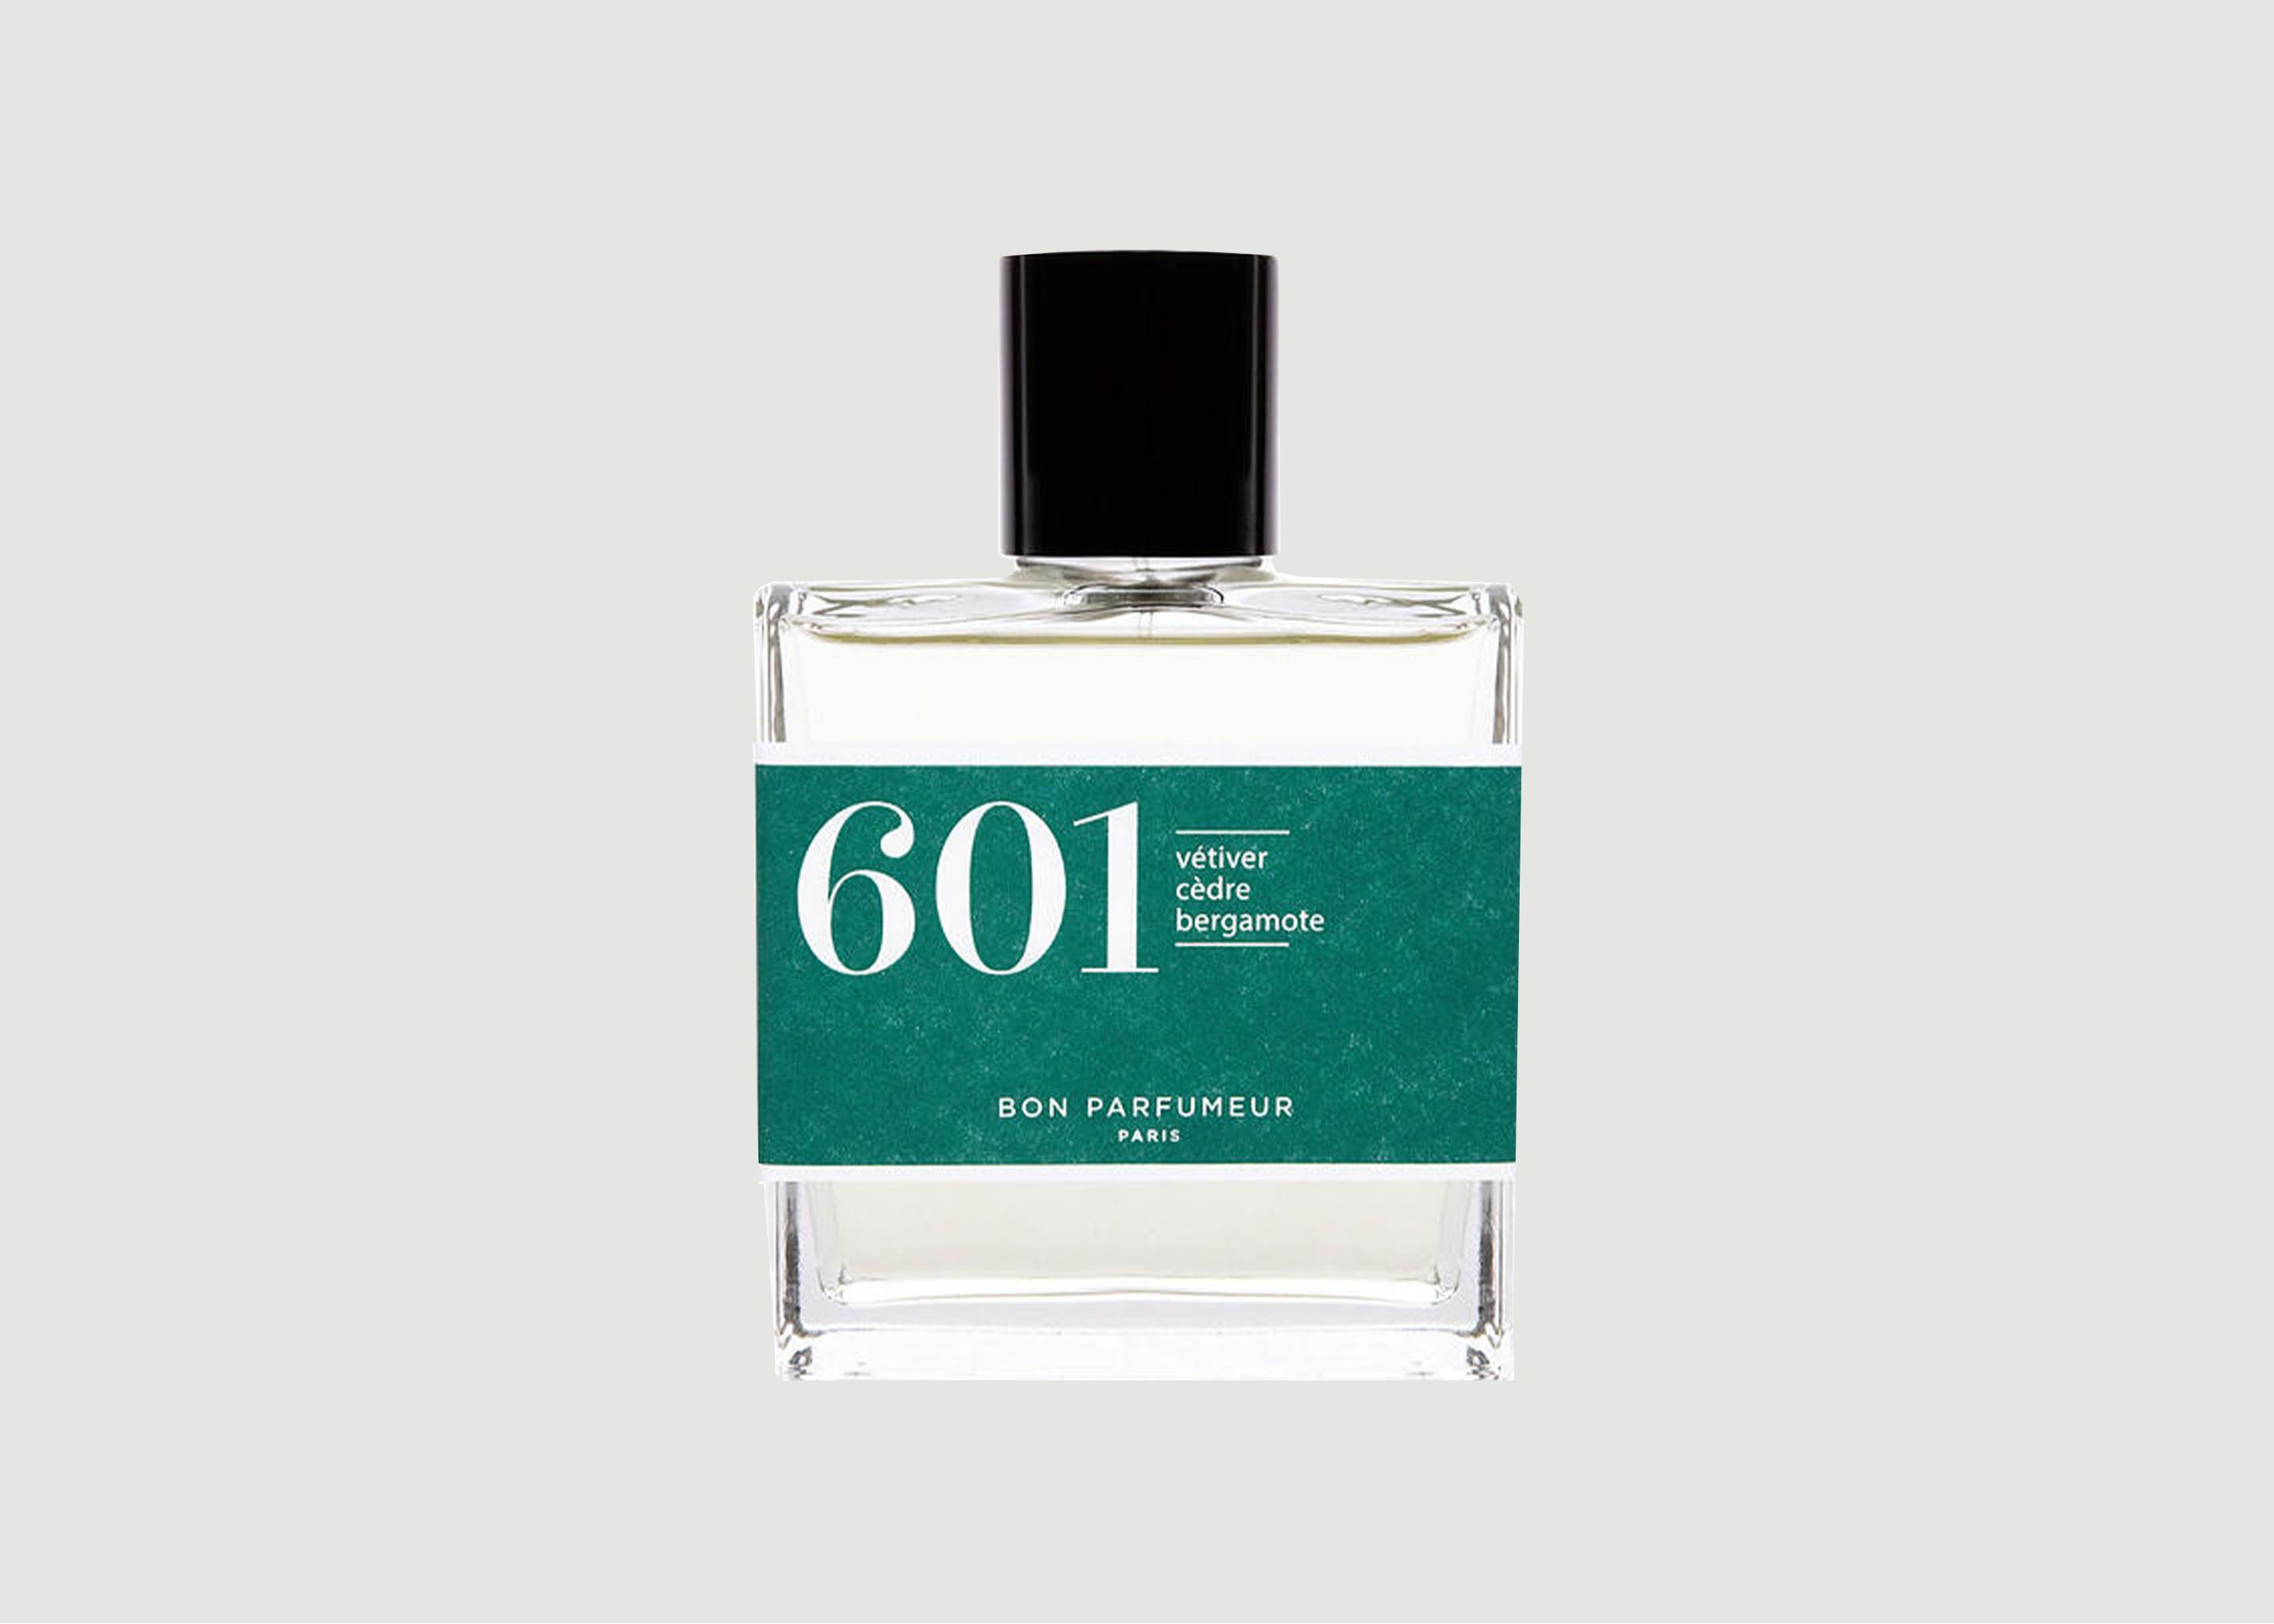 Eau de Parfum 601 : Vetiver, Cedar, Bergamot - Bon Parfumeur